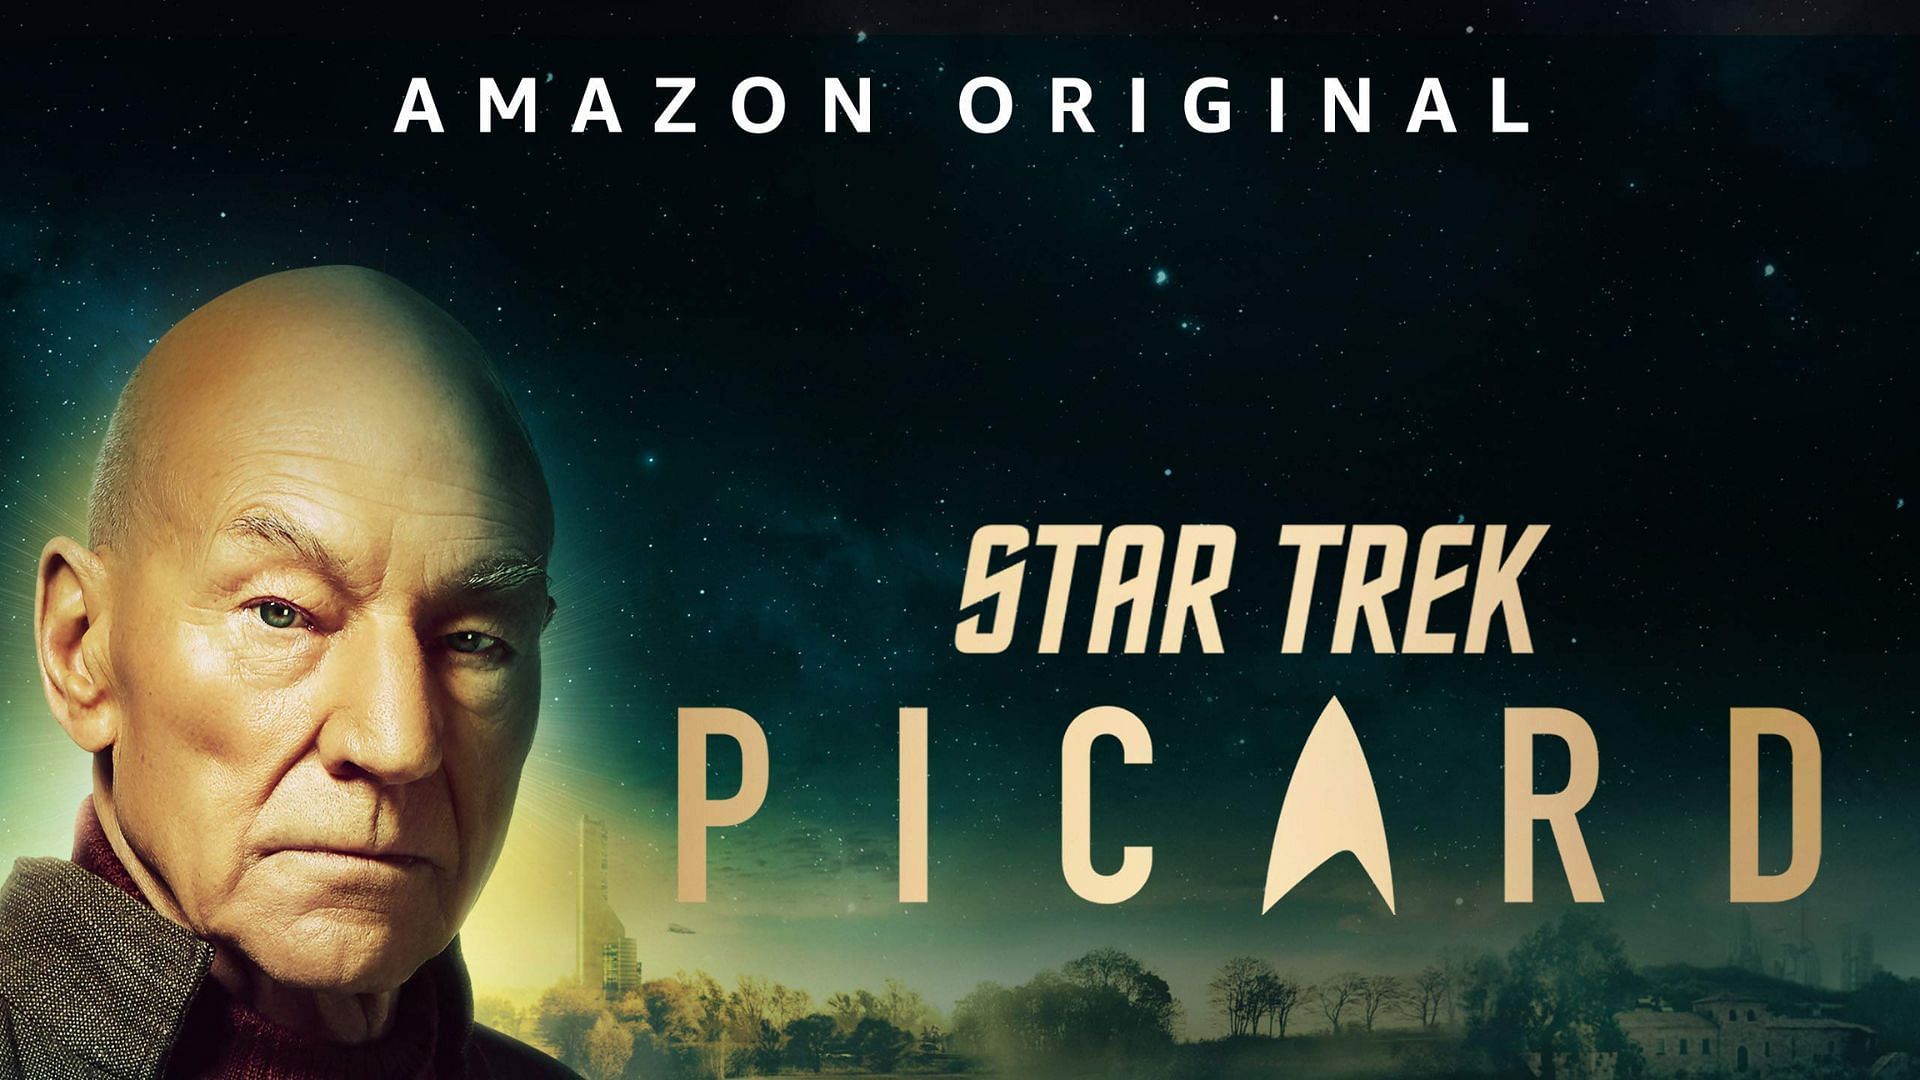 Star Trek: Picard promotional poster (Image via Amazon)